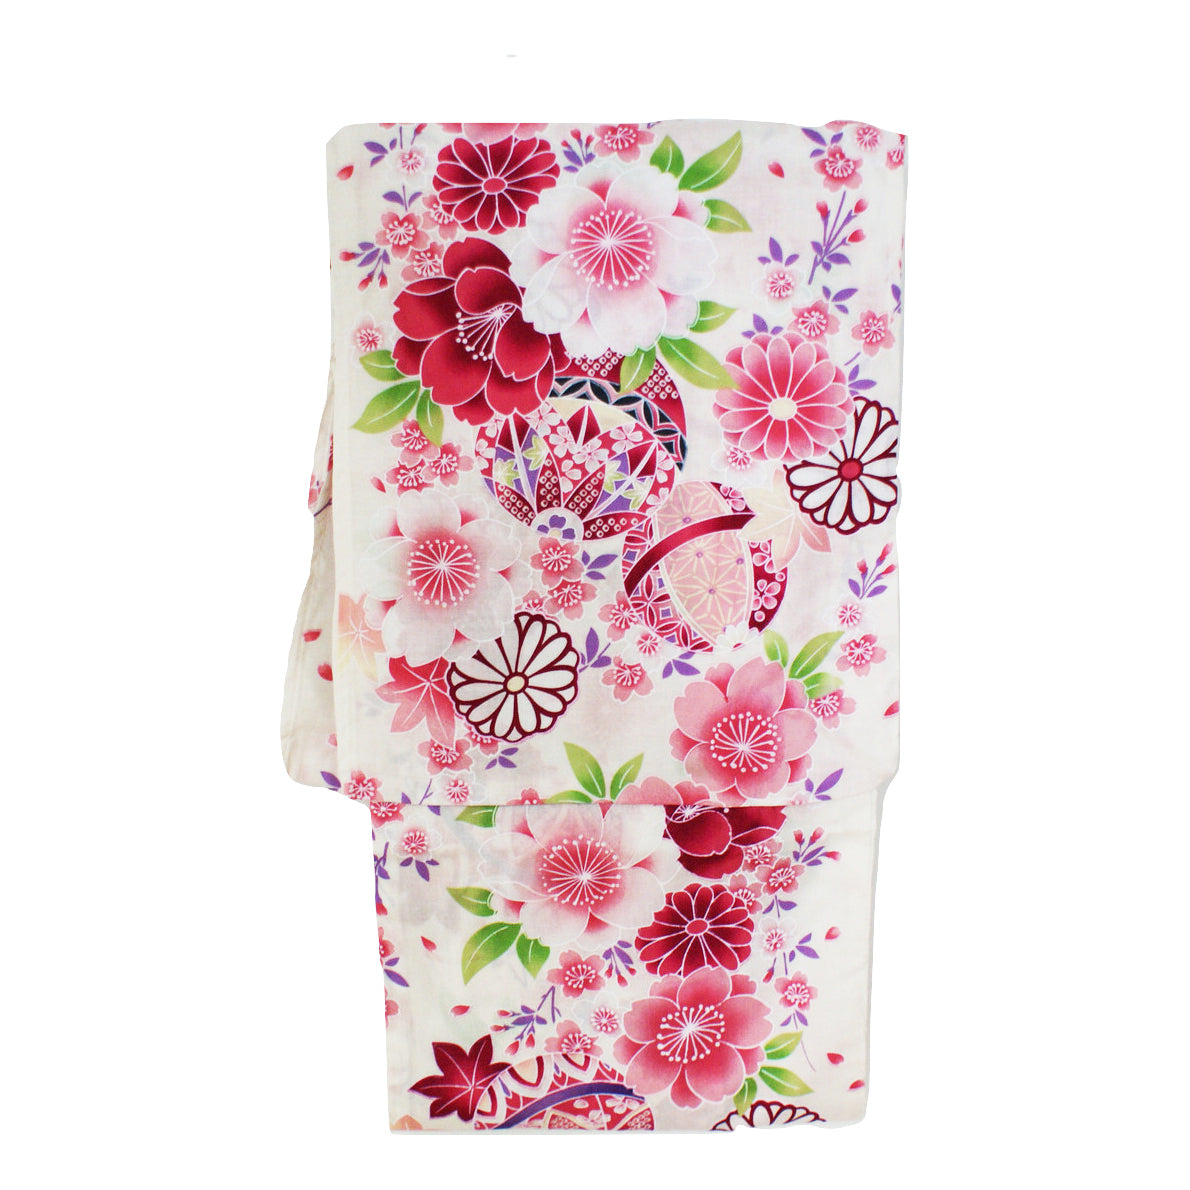 Yukata Kimono - Cherry Blossoms and Temari Balls Pink